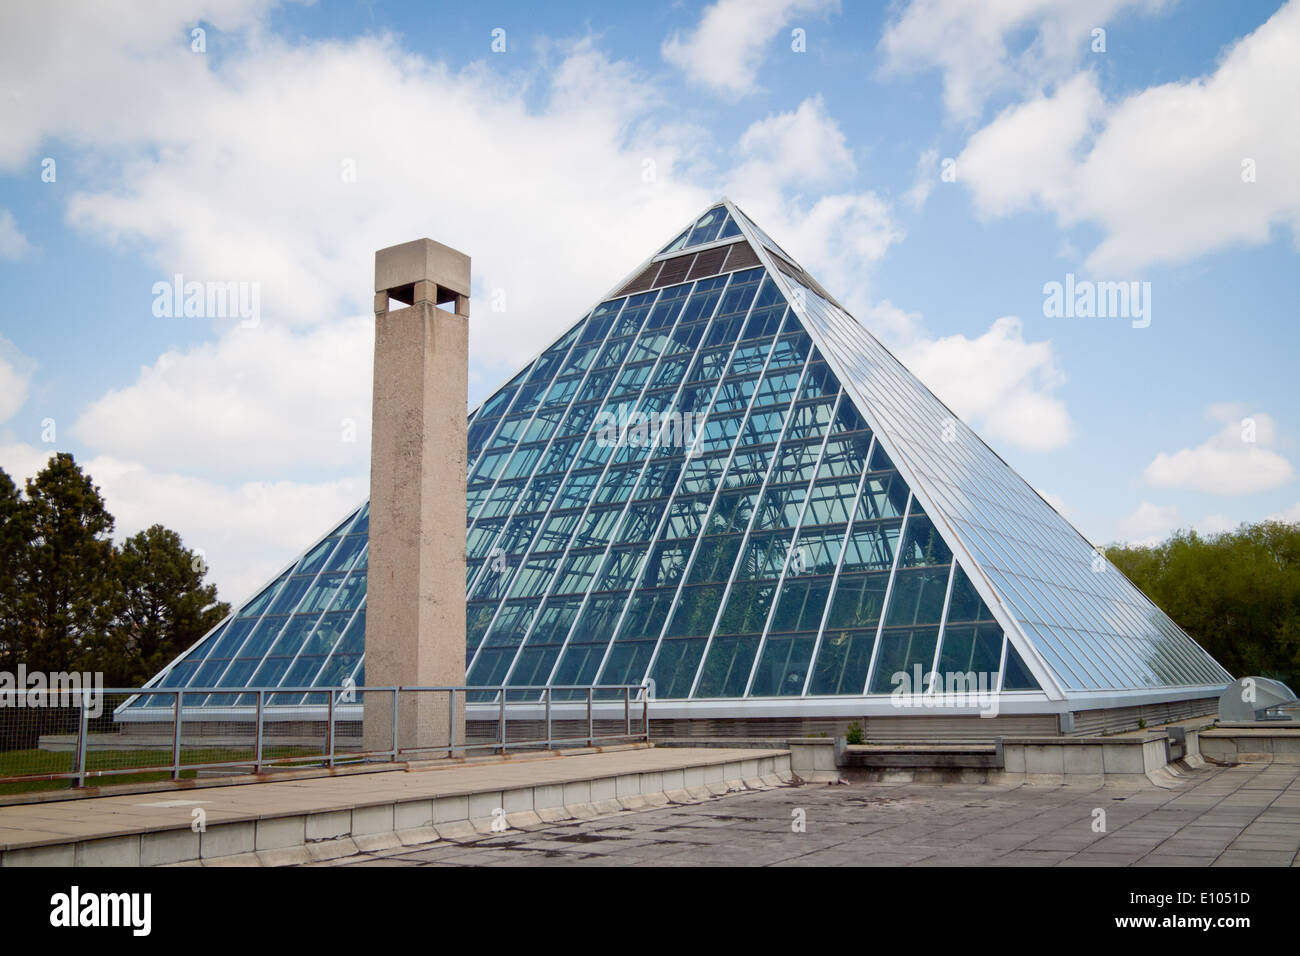 The distinctive glass pyramids of the Muttart Conservatory, a botanical ...